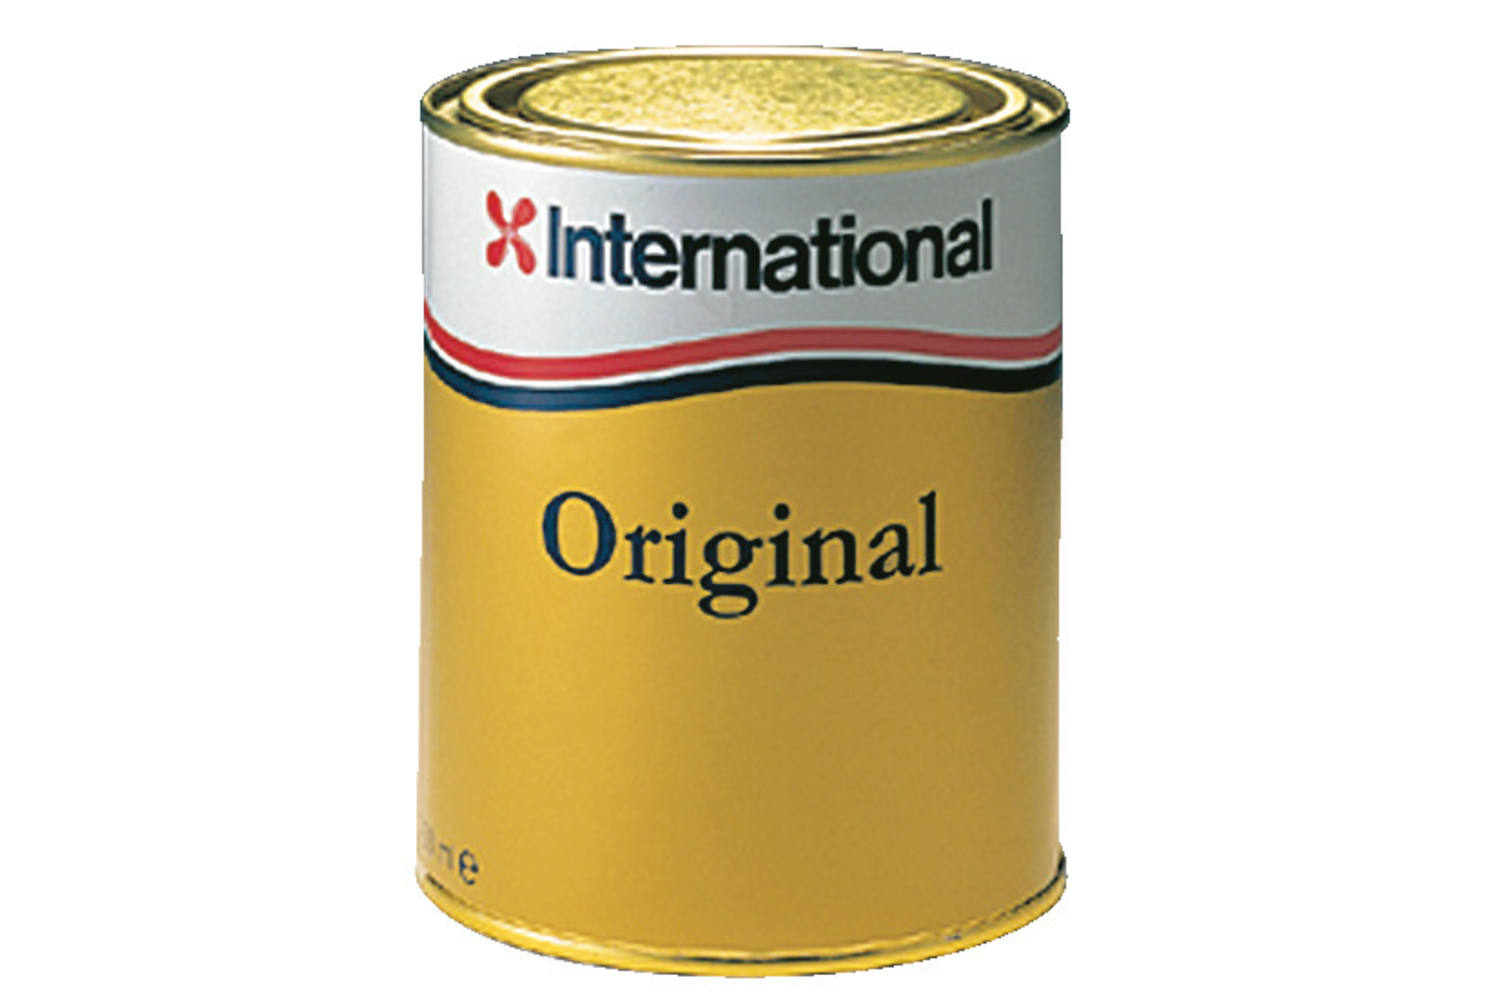 International Original gloss varnish - 375ml